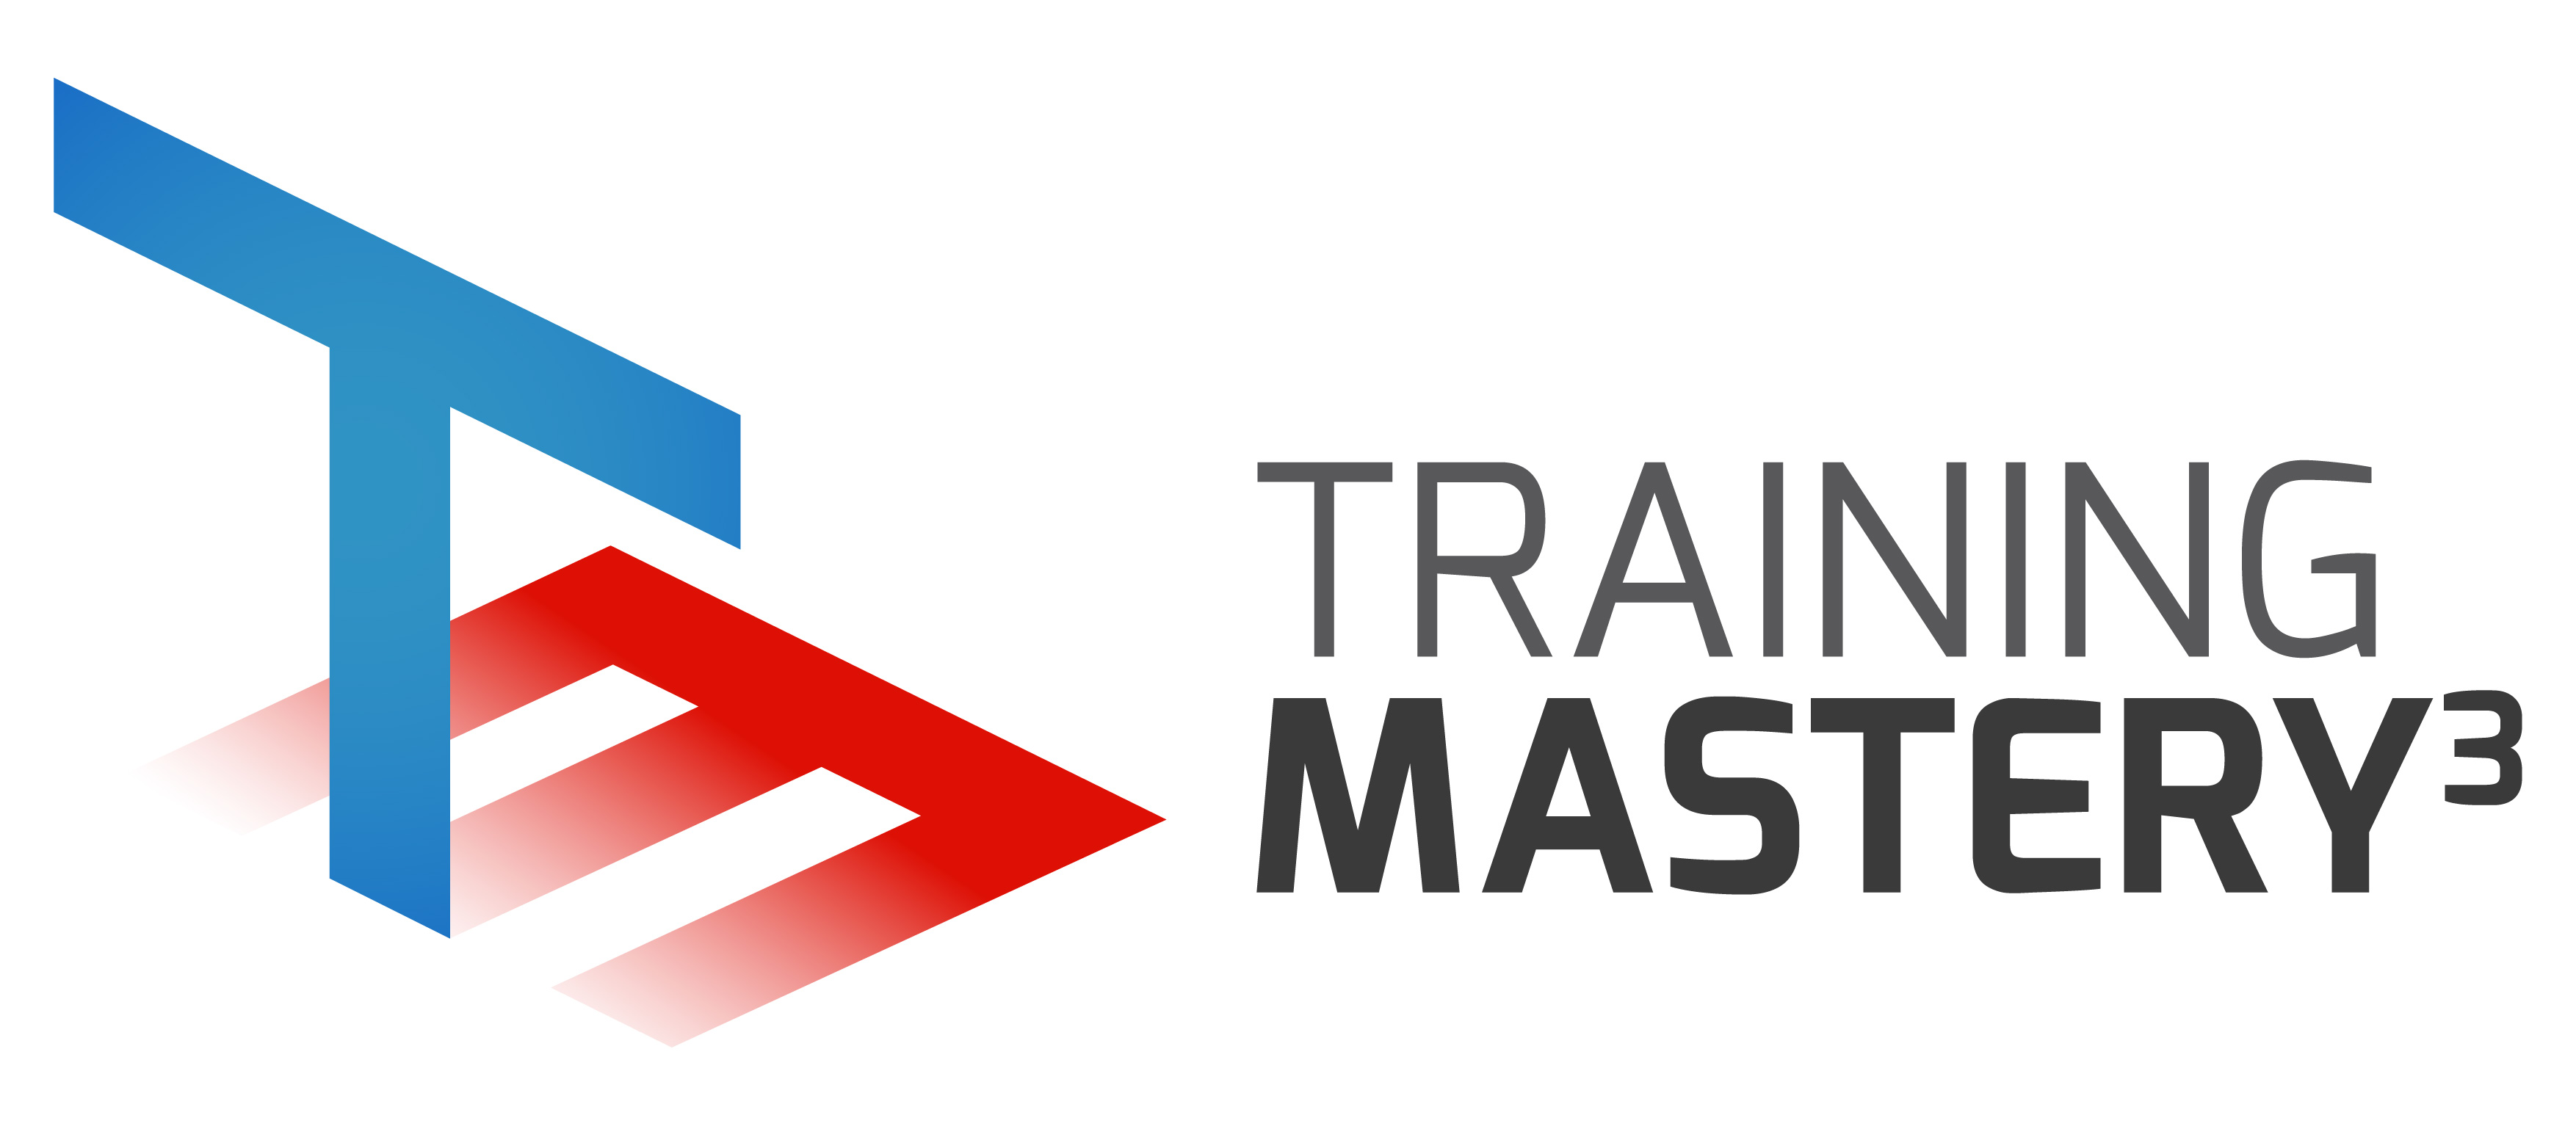 Training Mastery 3